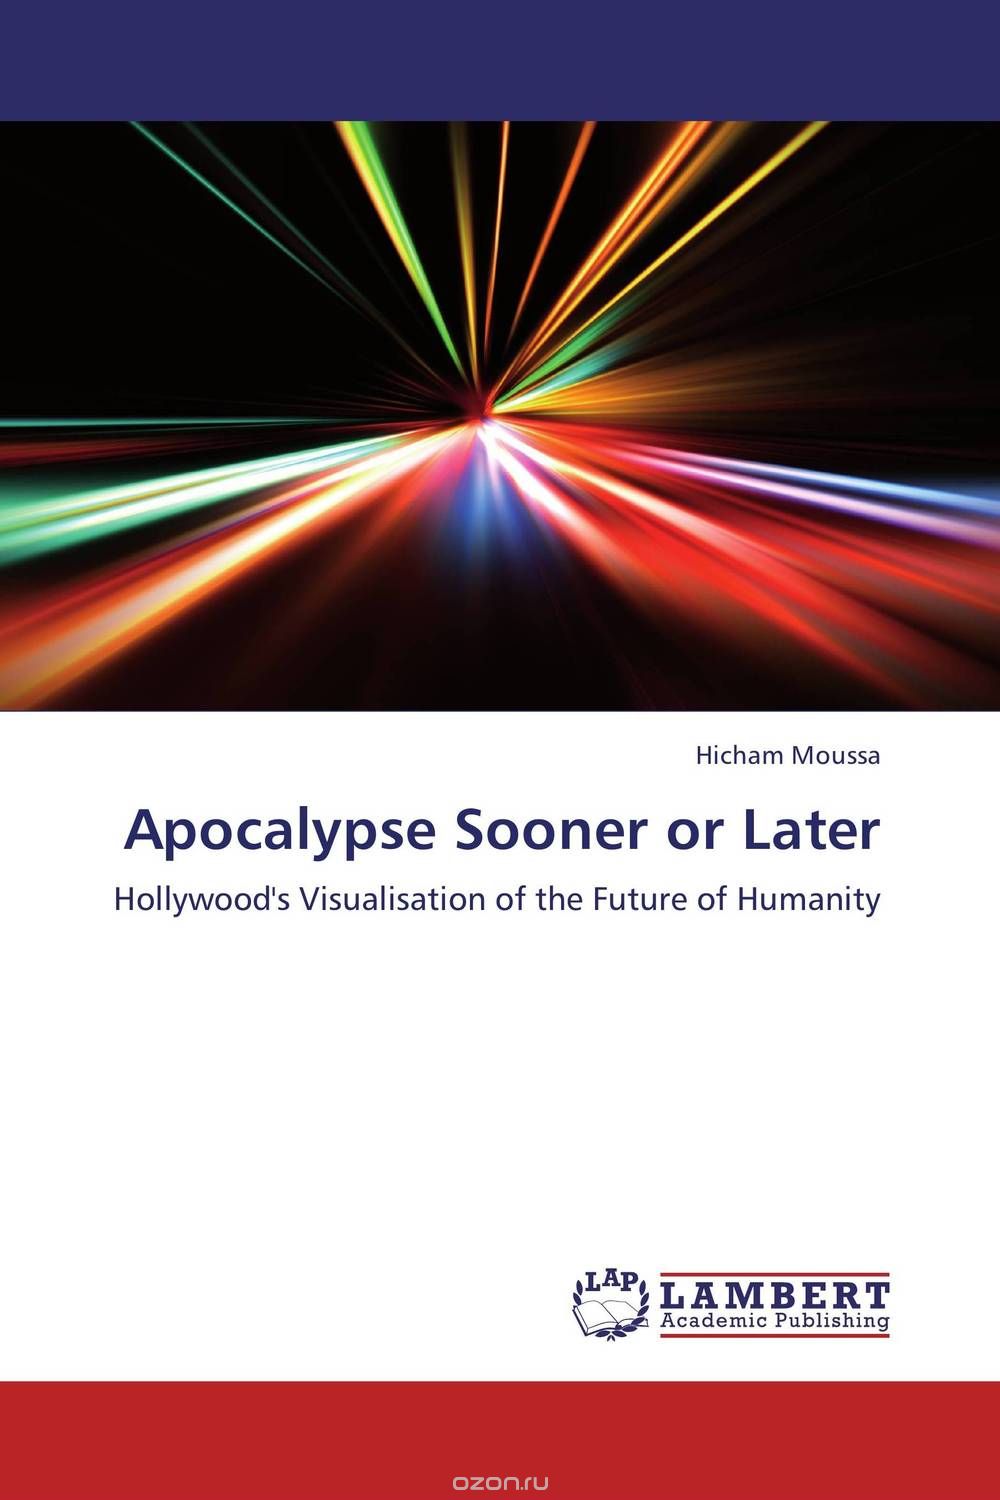 Скачать книгу "Apocalypse Sooner or Later"